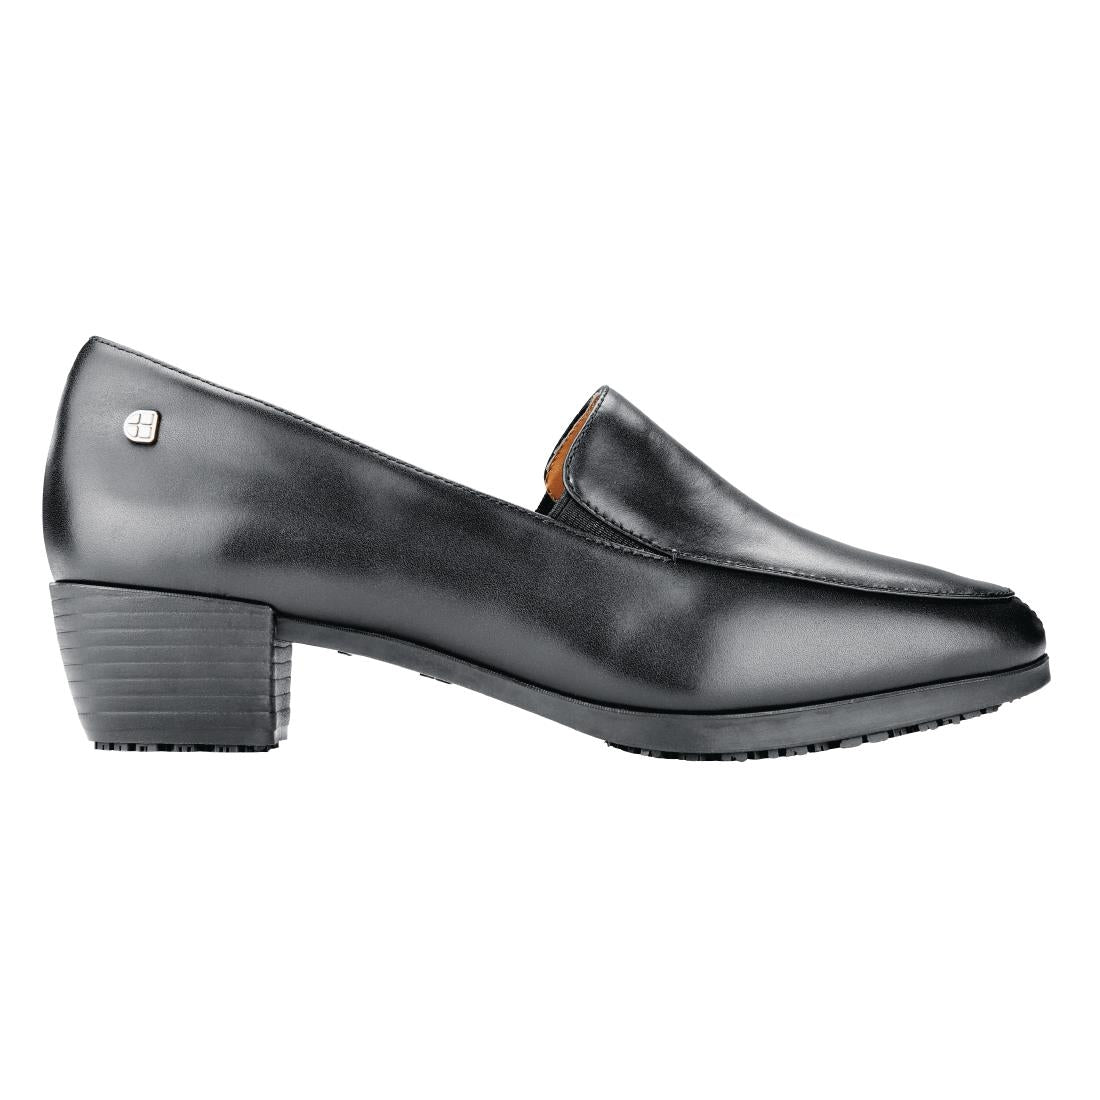 BB605-38 Shoes for Crews Envy Slip On Dress Shoe Black Size 38